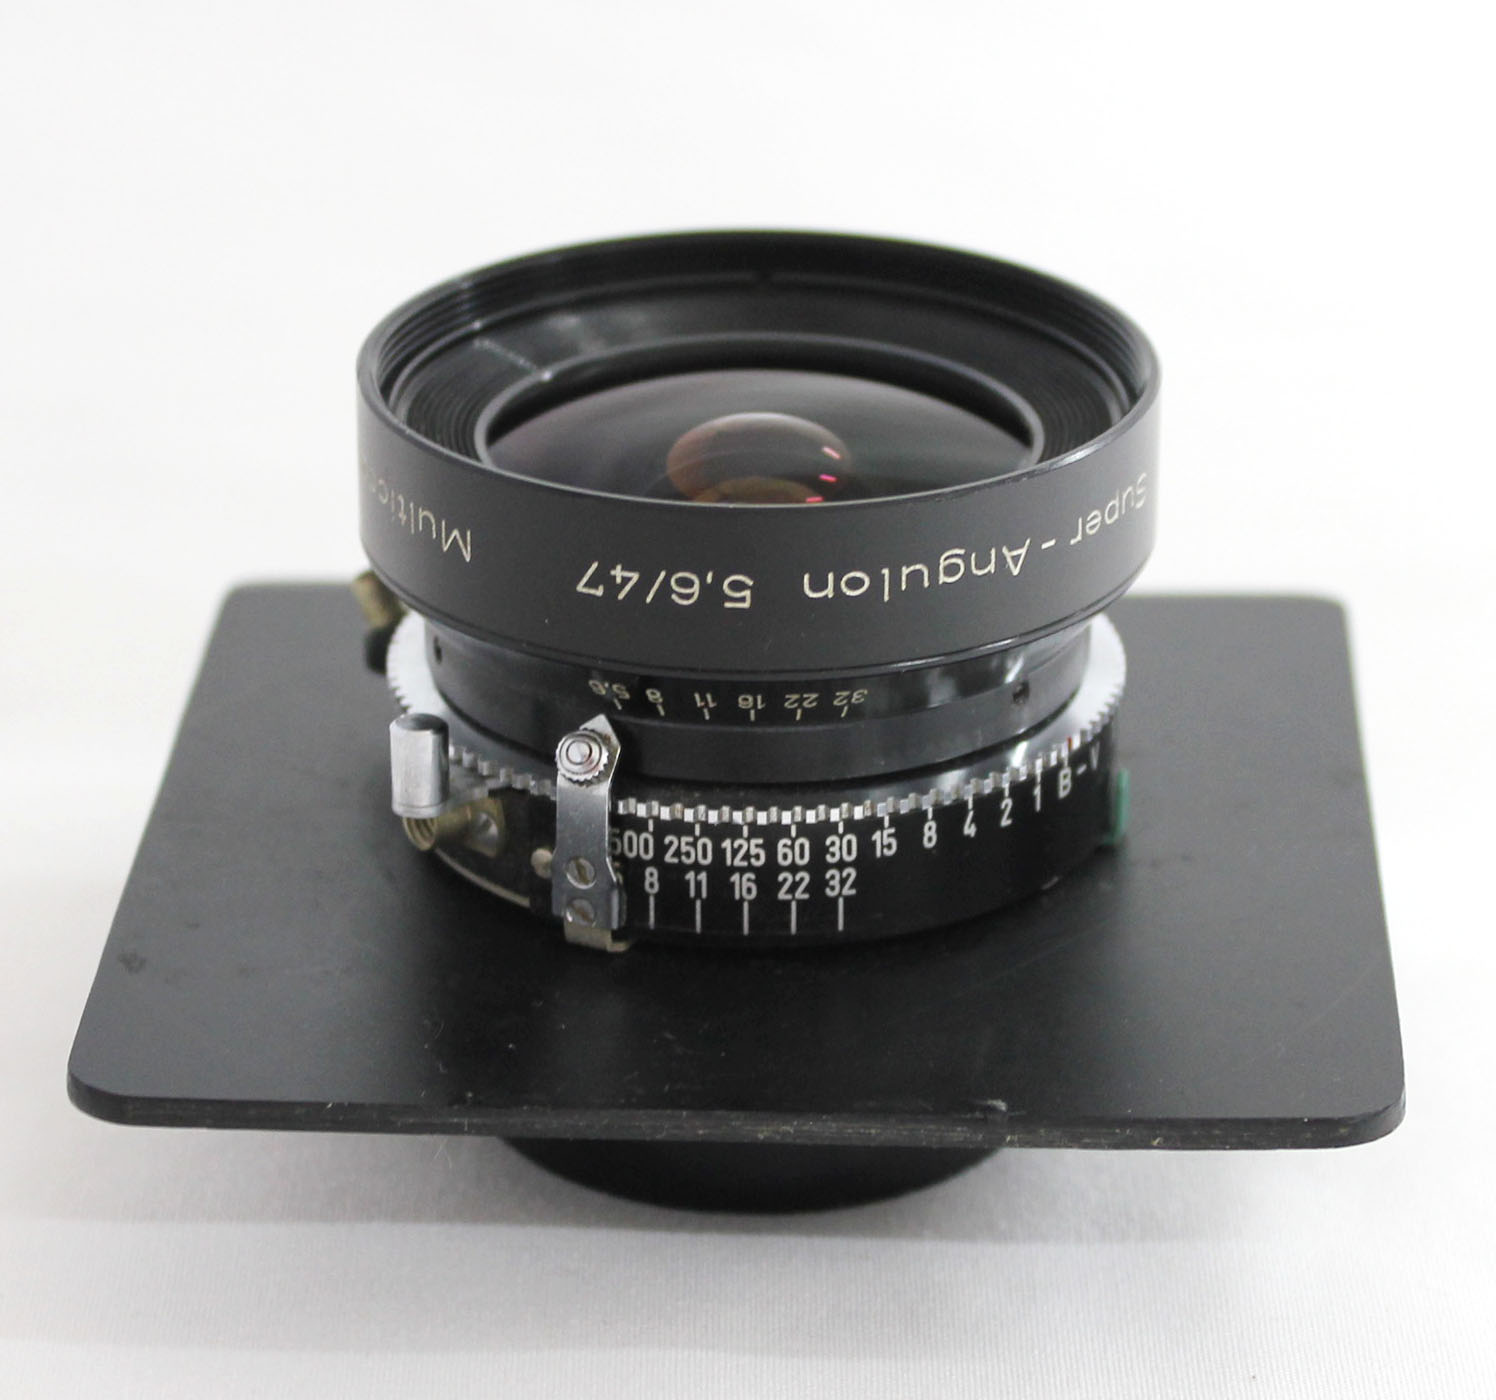  Schneider Kreuznach Super Angulon 47mm f/5.6 MC Multicoating Large Format Lens from Japan Photo 5